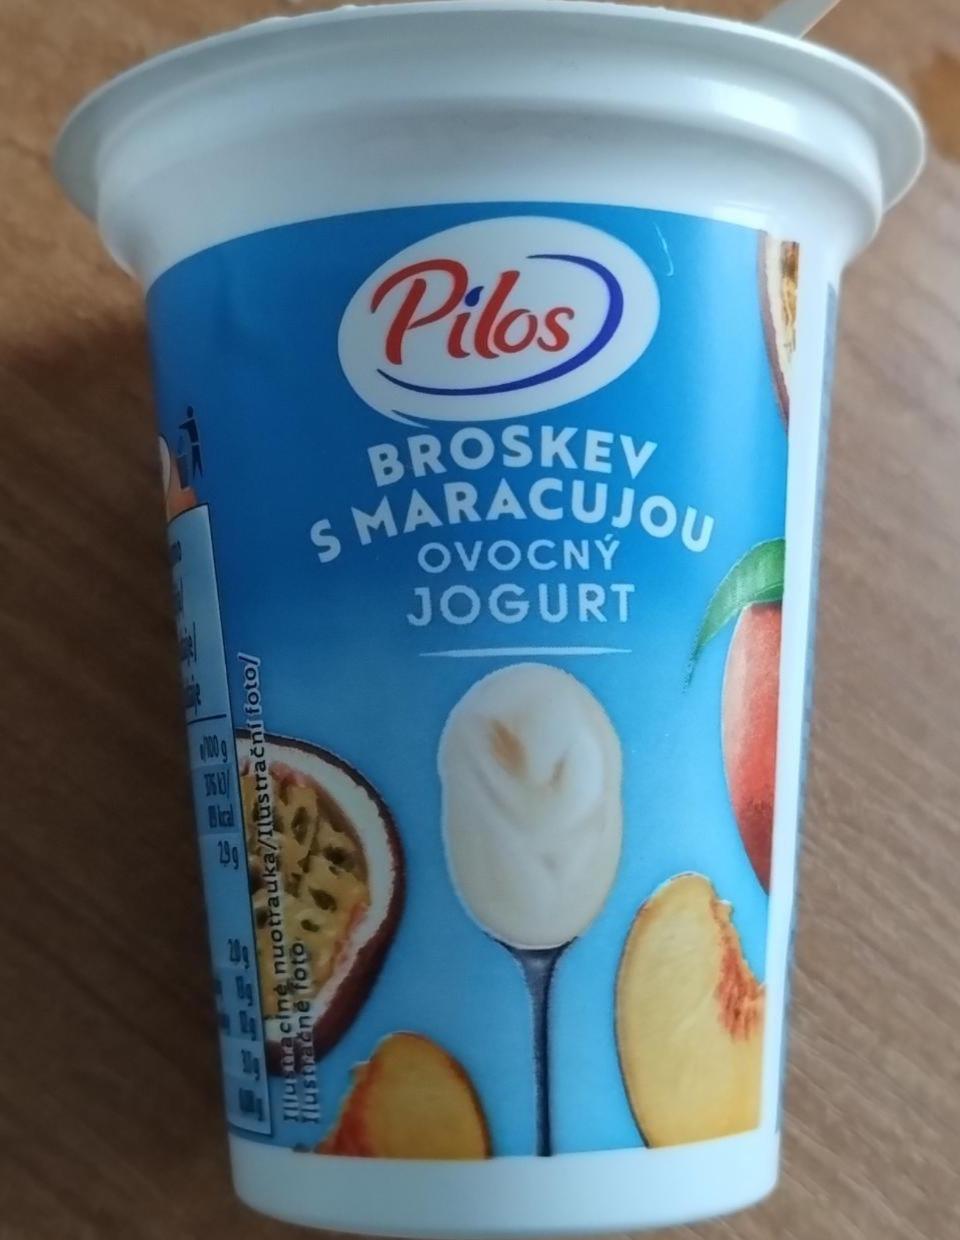 Fotografie - Broskev s Maracujou ovocný jogurt Pilos